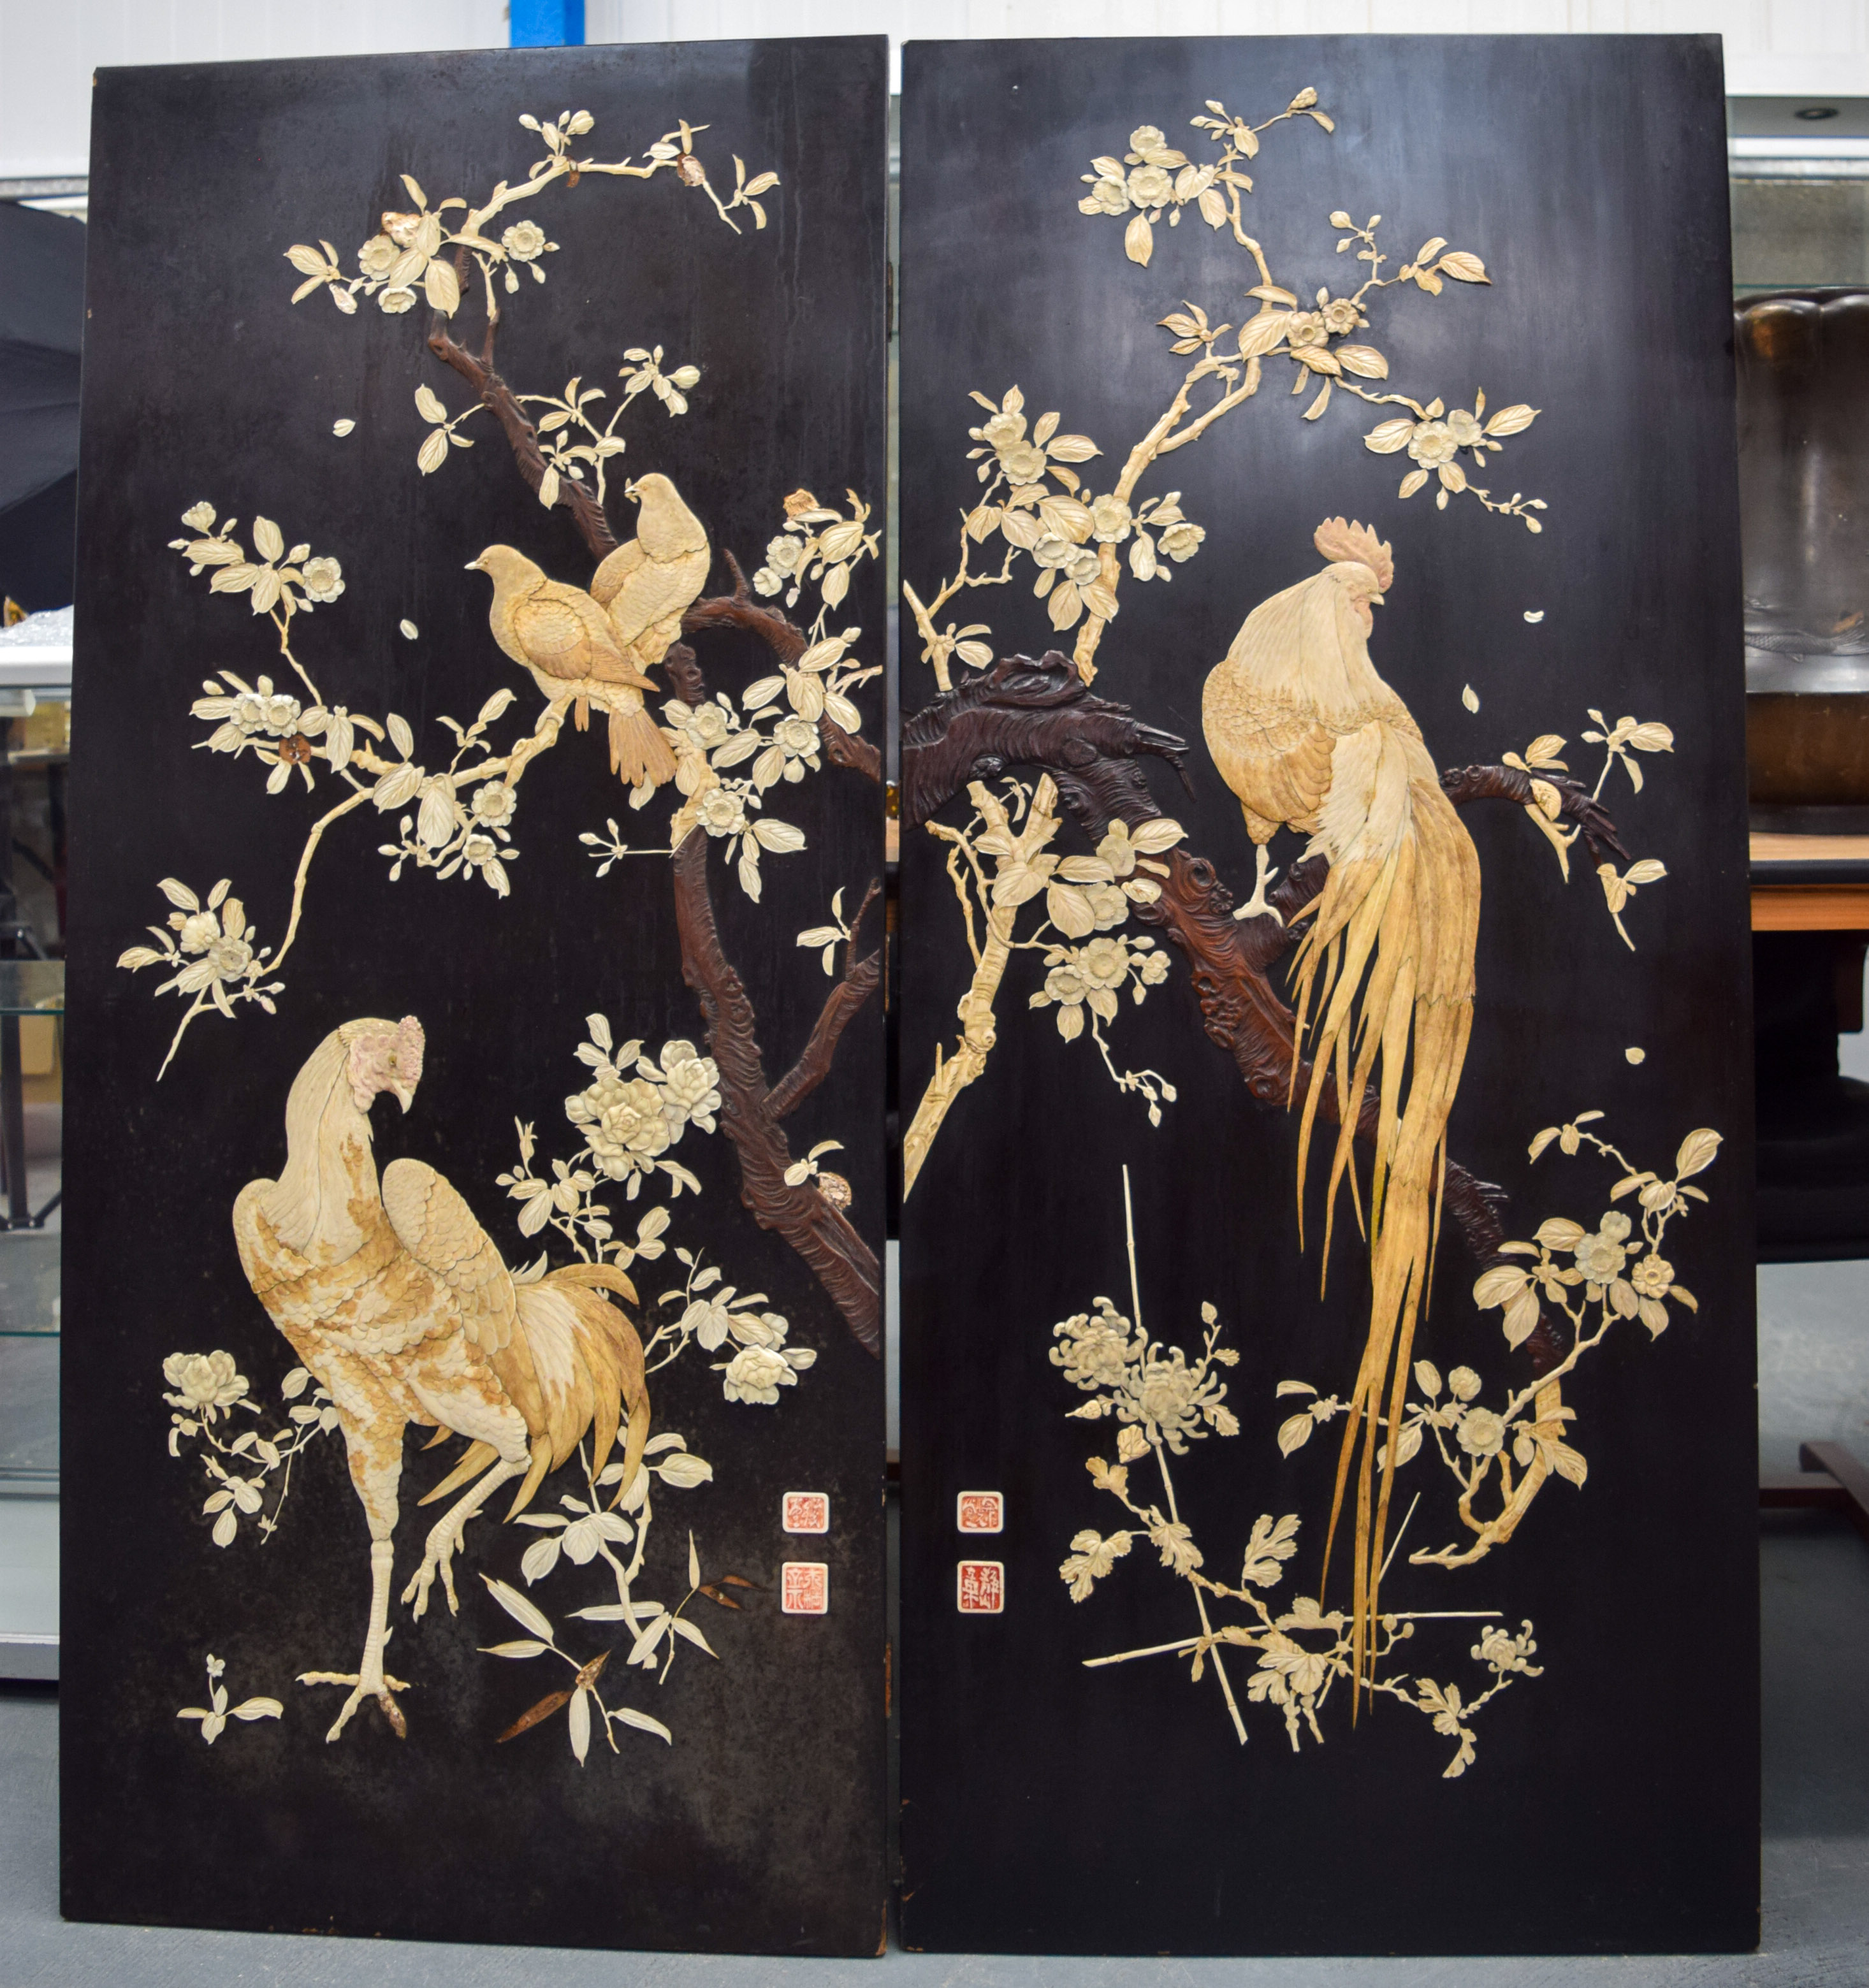 A 19TH CENTURY JAPANESE MEIJI PERIOD INK SILK SCROLL by Hoisu Sakai. Image 26 cm x 18 cm.